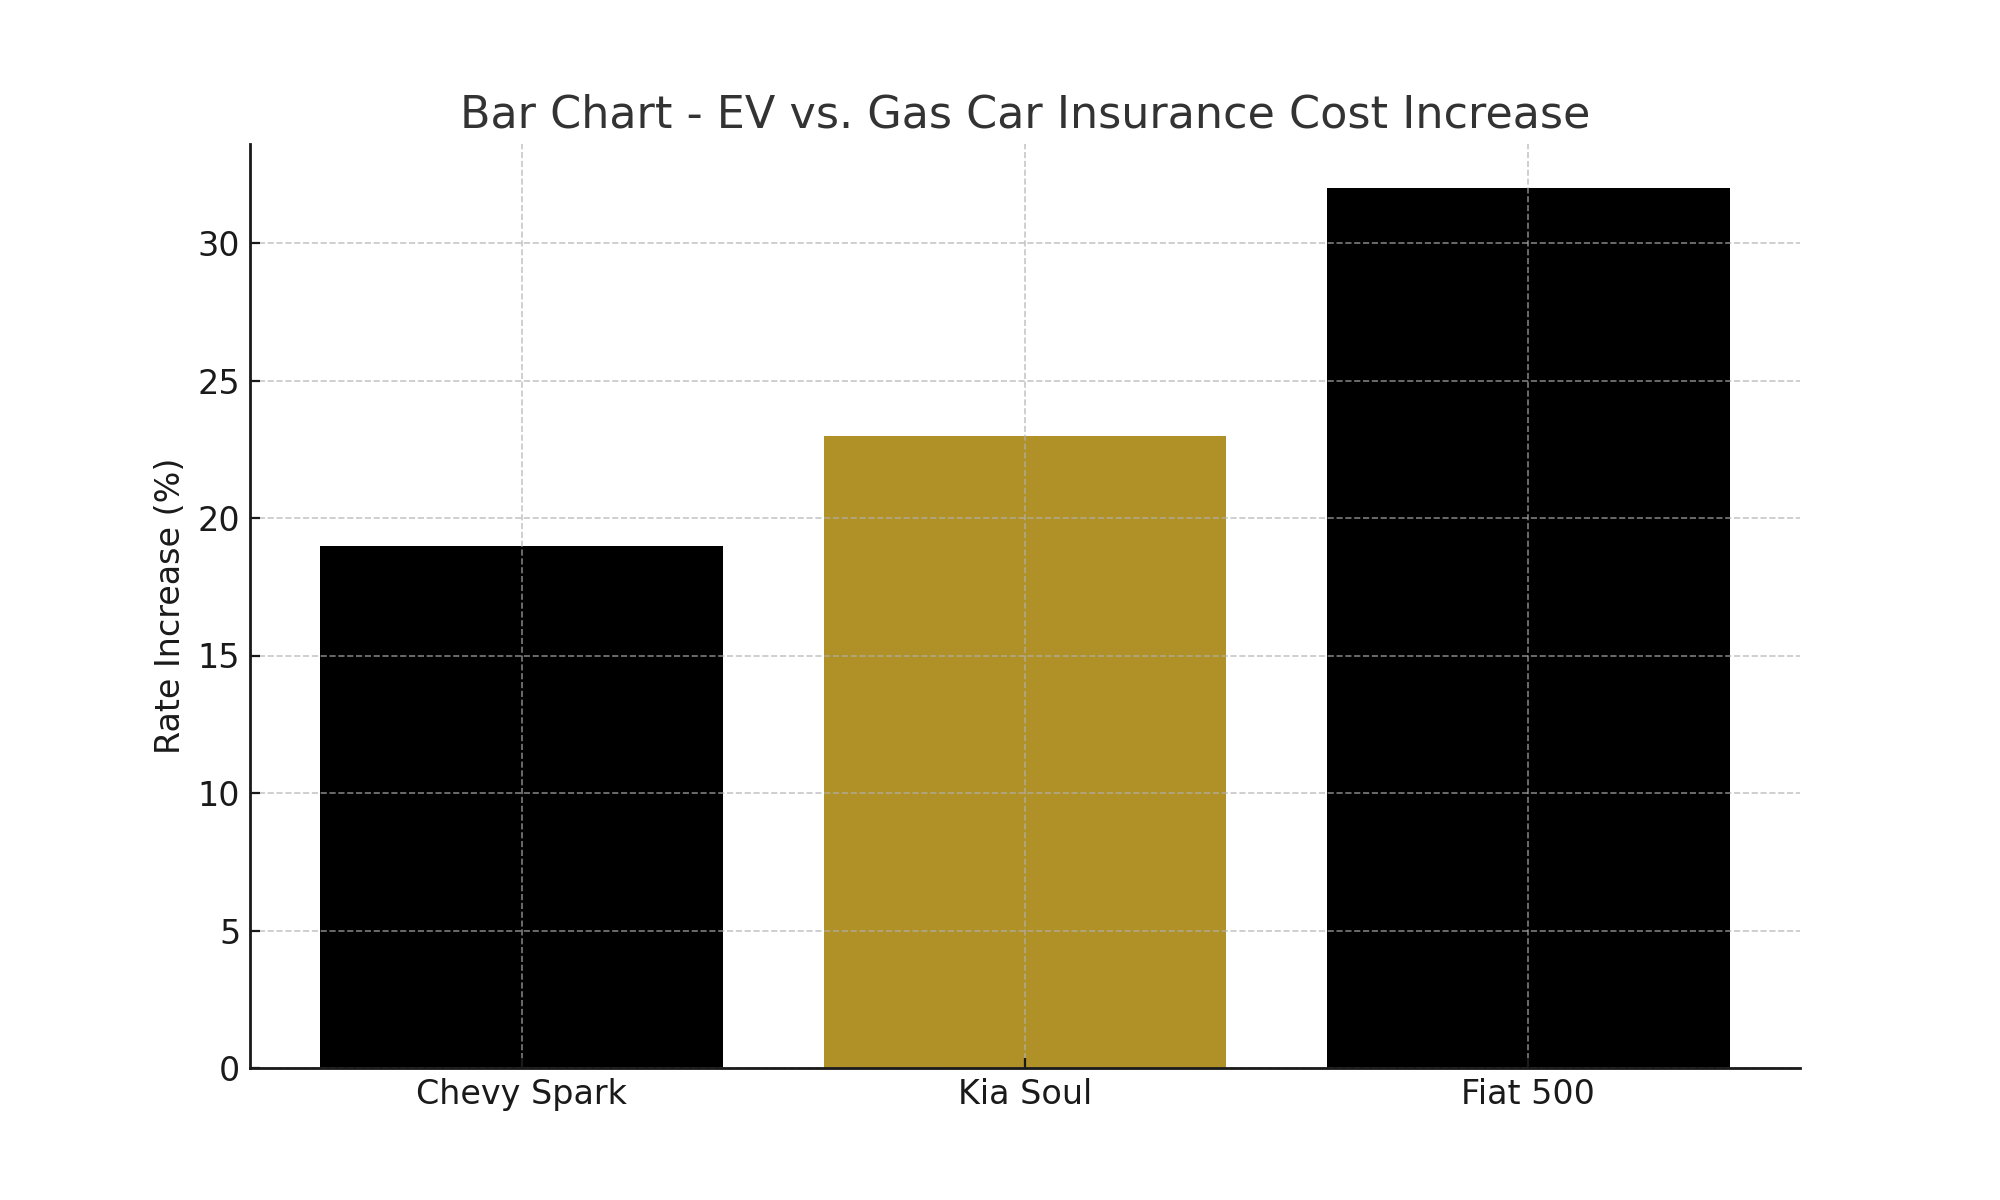 EV Vs Gas Insurance Cost Increases